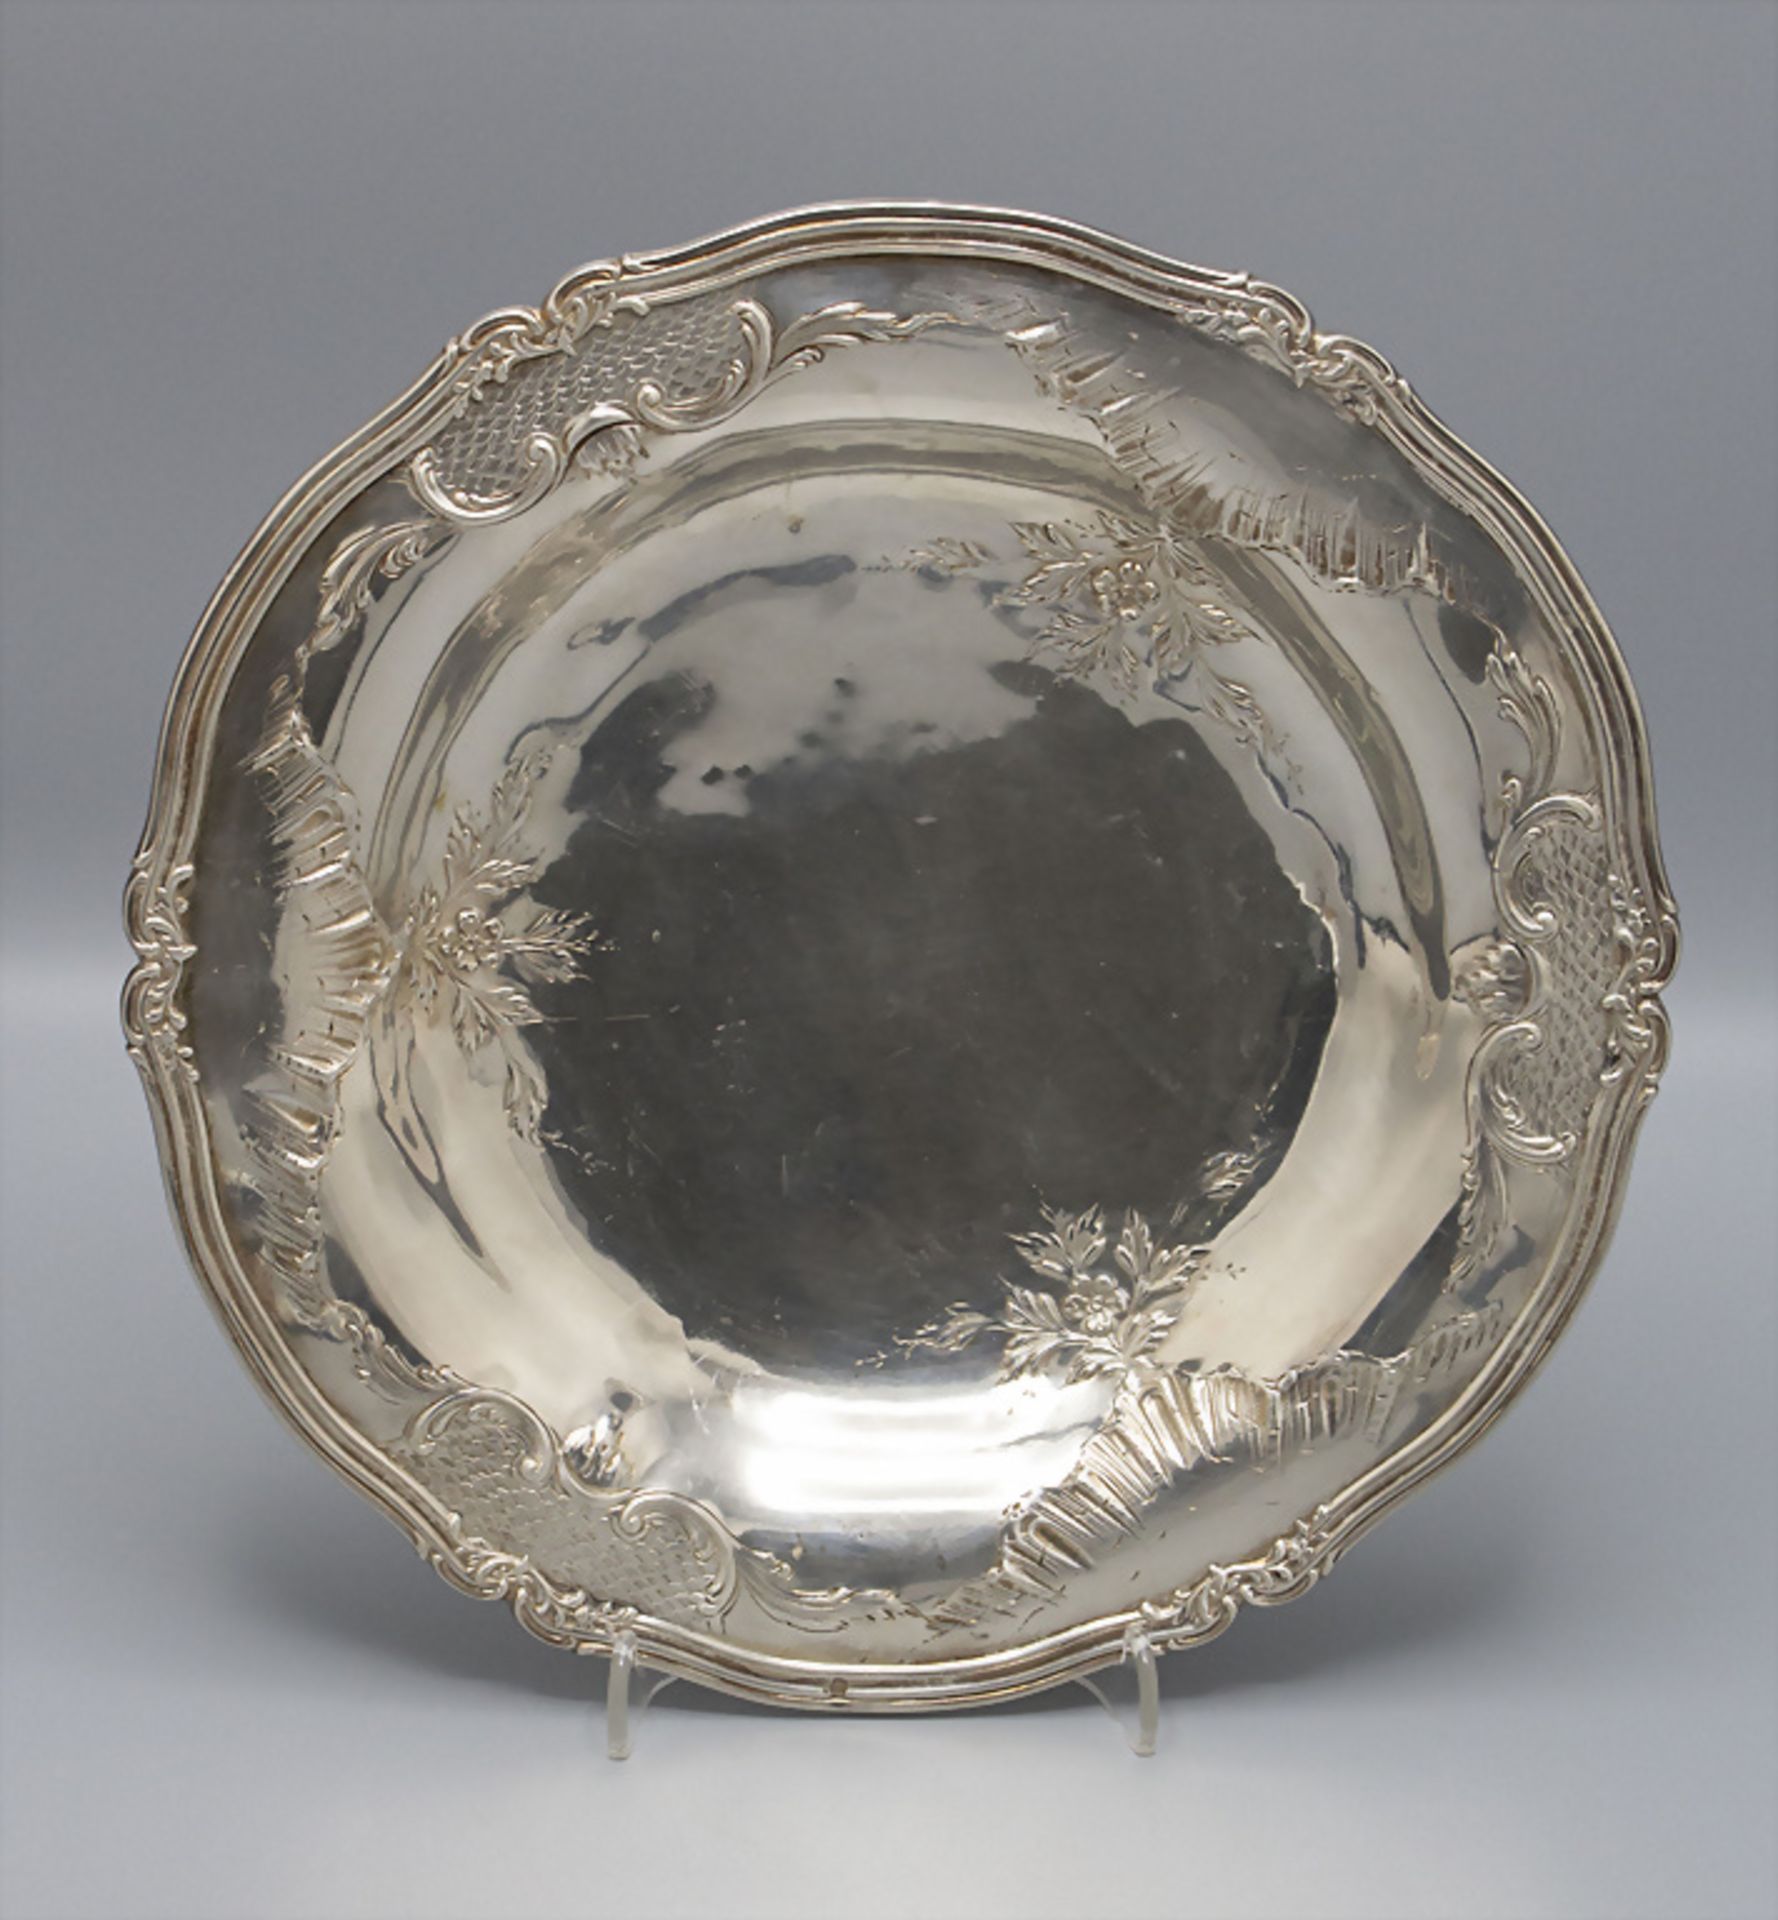 4 Tazza / A set of 4 silver footed serving bowls, V. Boivin, Paris, um 1900 - Image 2 of 6